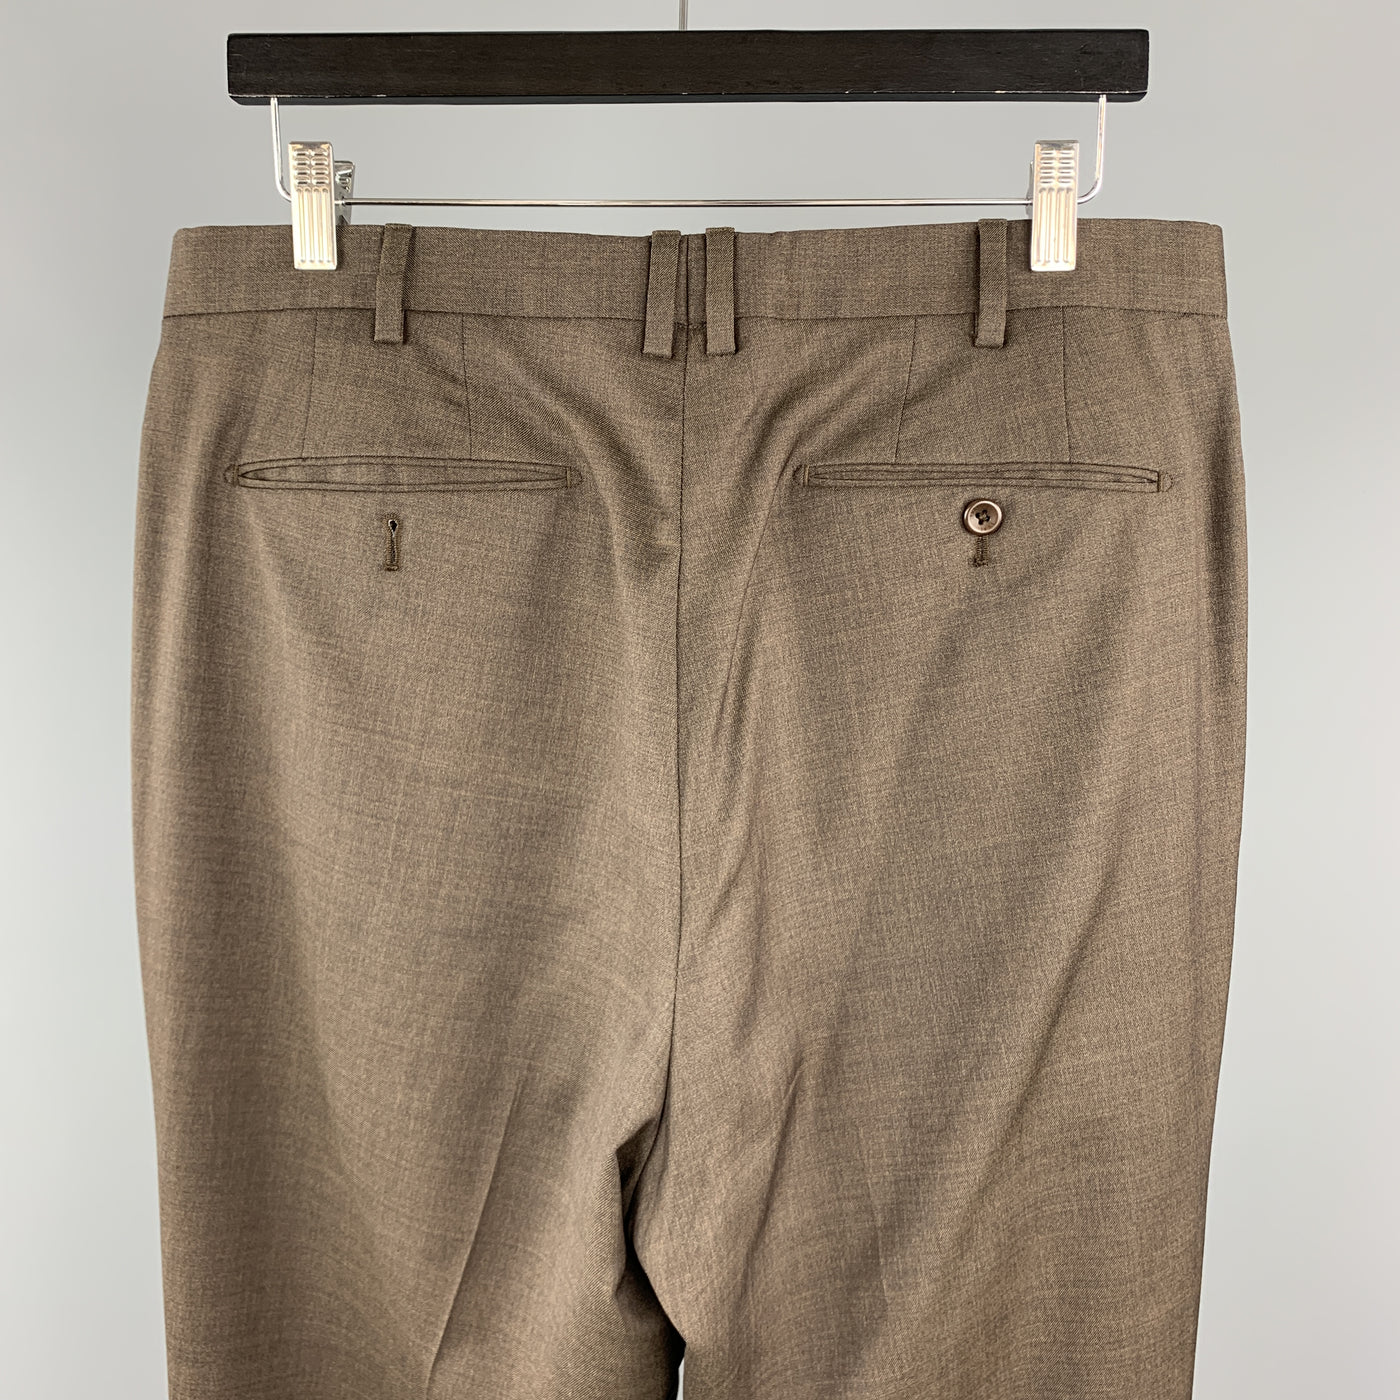 INCOTEX Size 32 Brown Wool Front Tab Cuffed Dress Pants